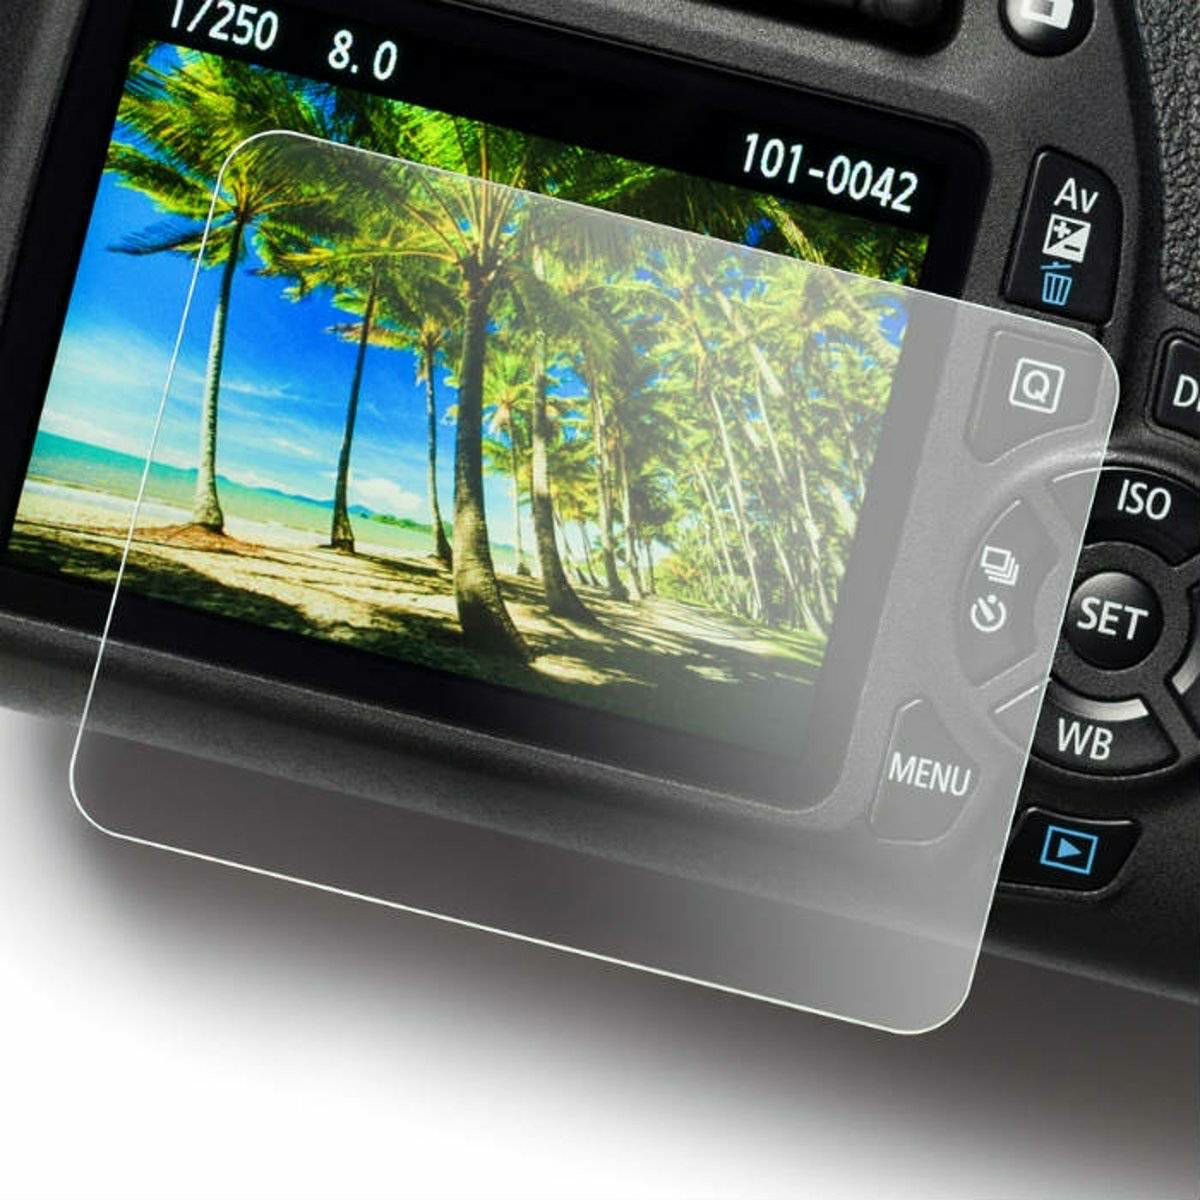 Discovered easyCover LCD Tempered Glass Screen protector zaštita ekrana za Nikon D7500 (GSPND7500)